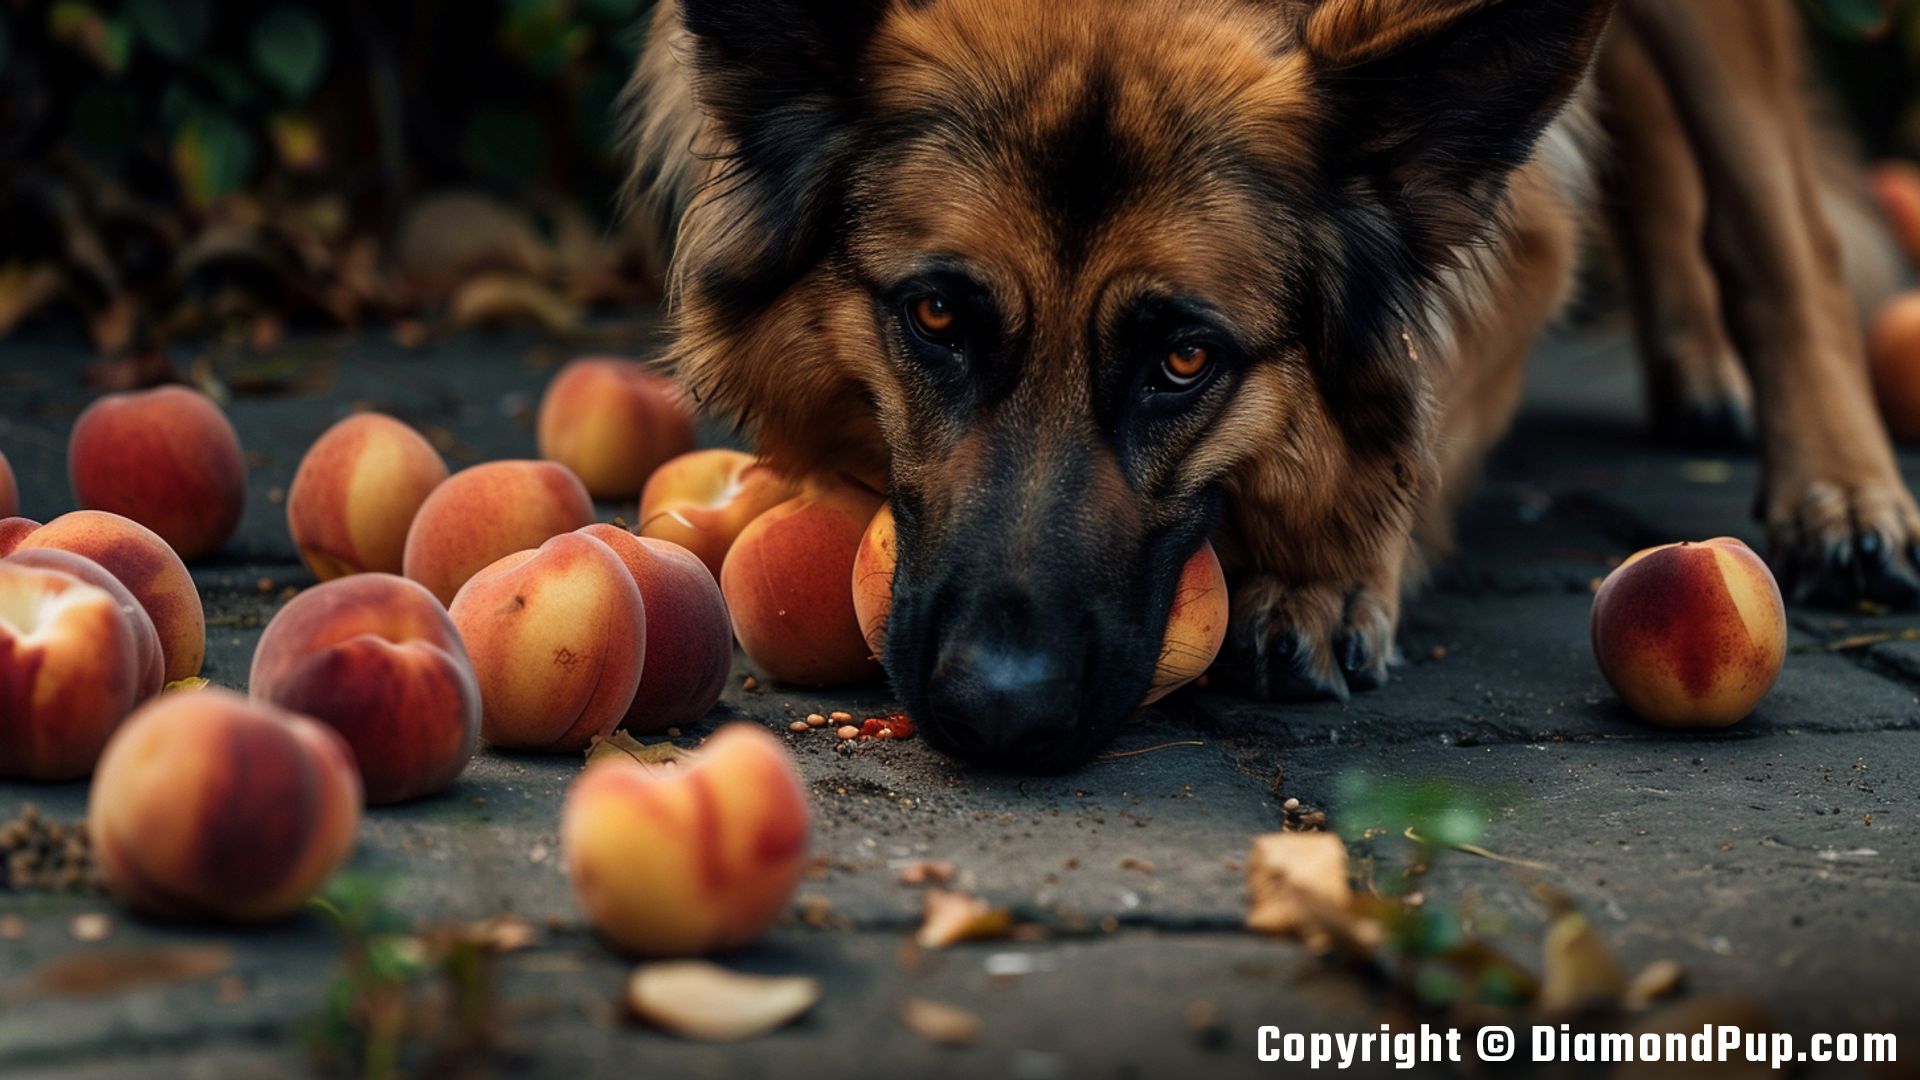 Photograph of a Playful German Shepherd Eating Peaches